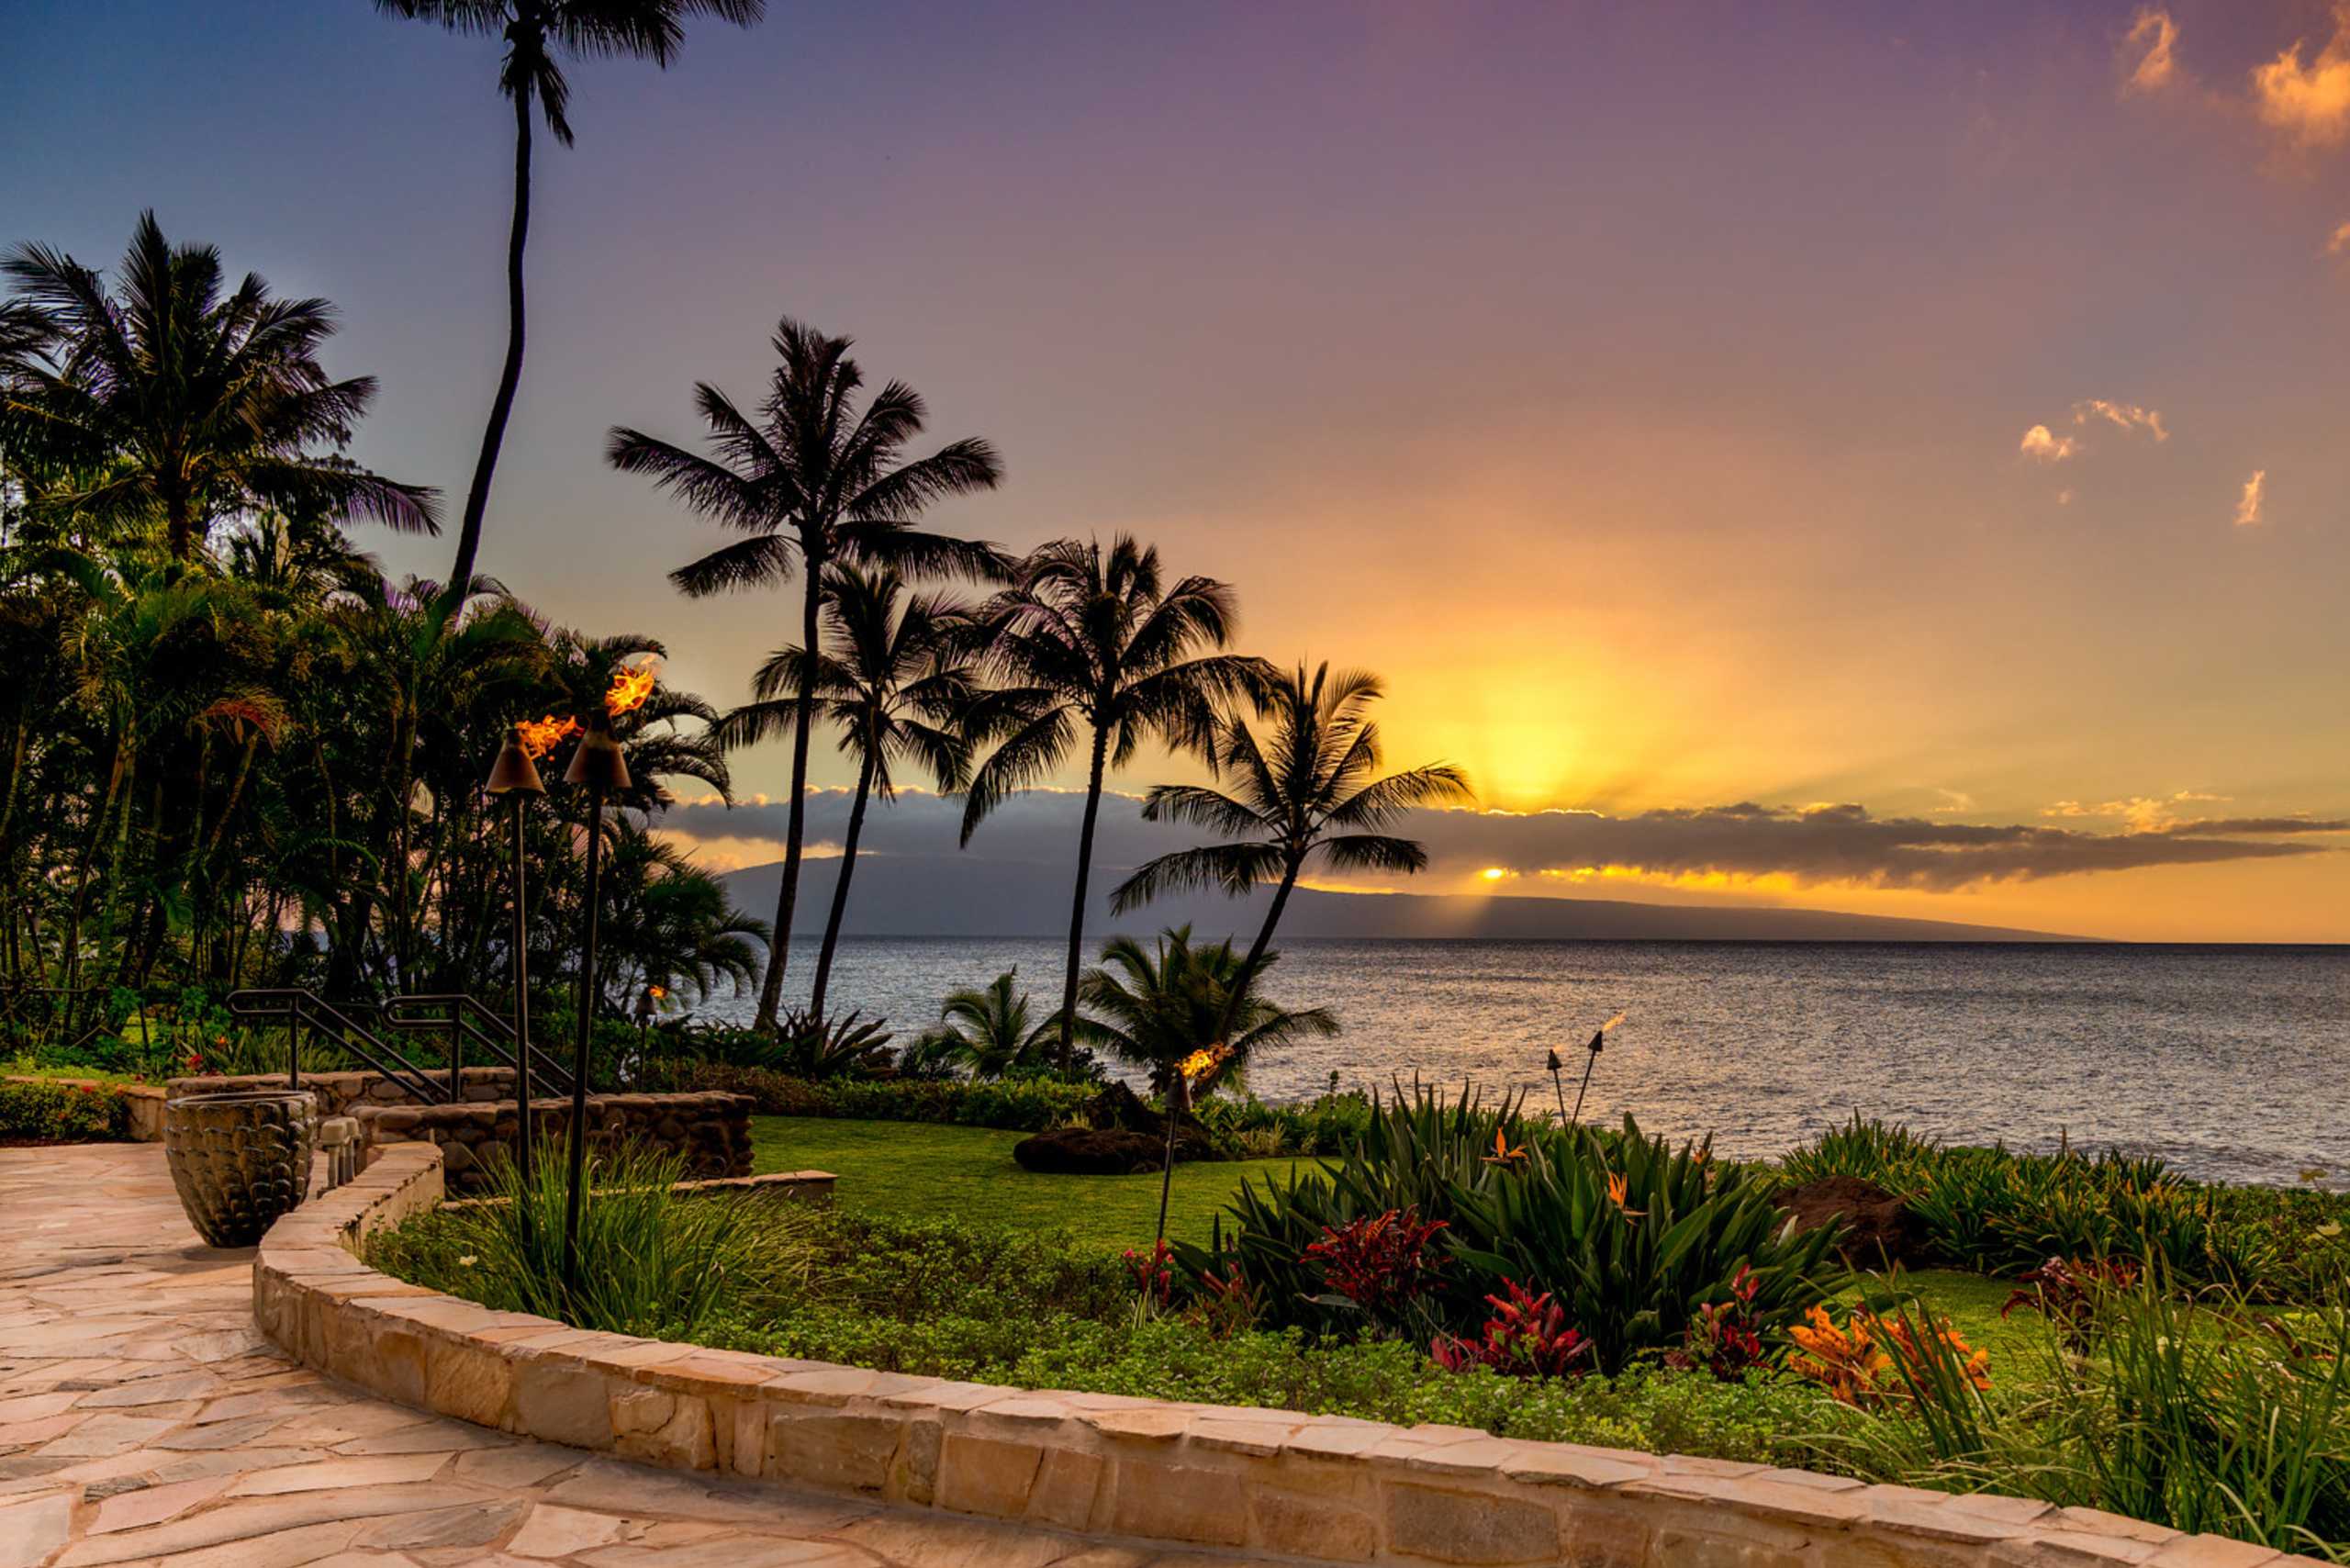 Live the Maui Lifestyle